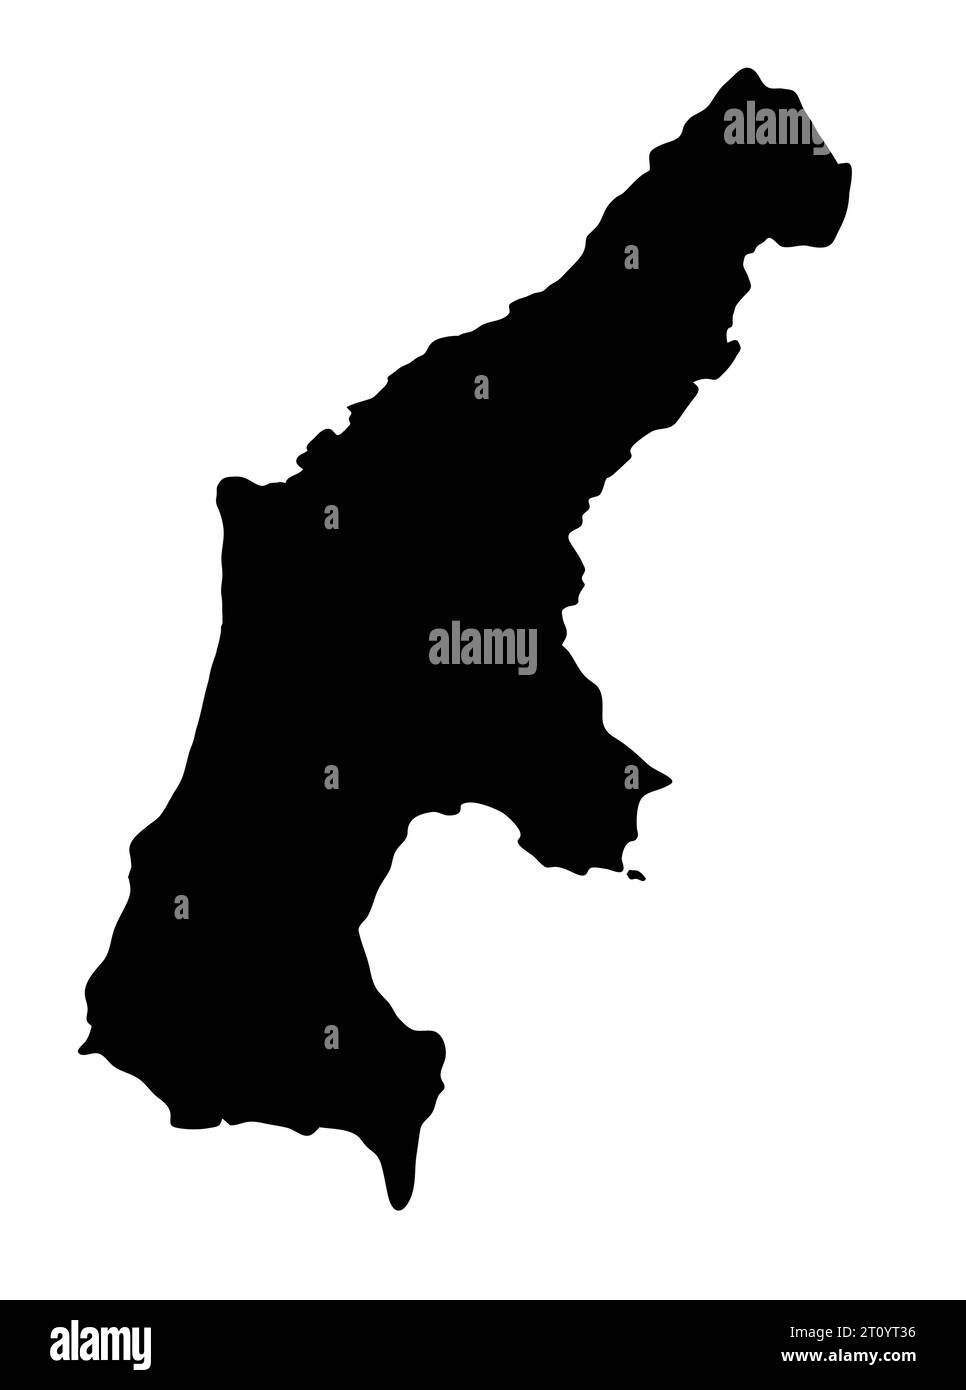 aerial map of saipan - northern mariana island map silhouette region territory, black shape style illustration Stock Vector